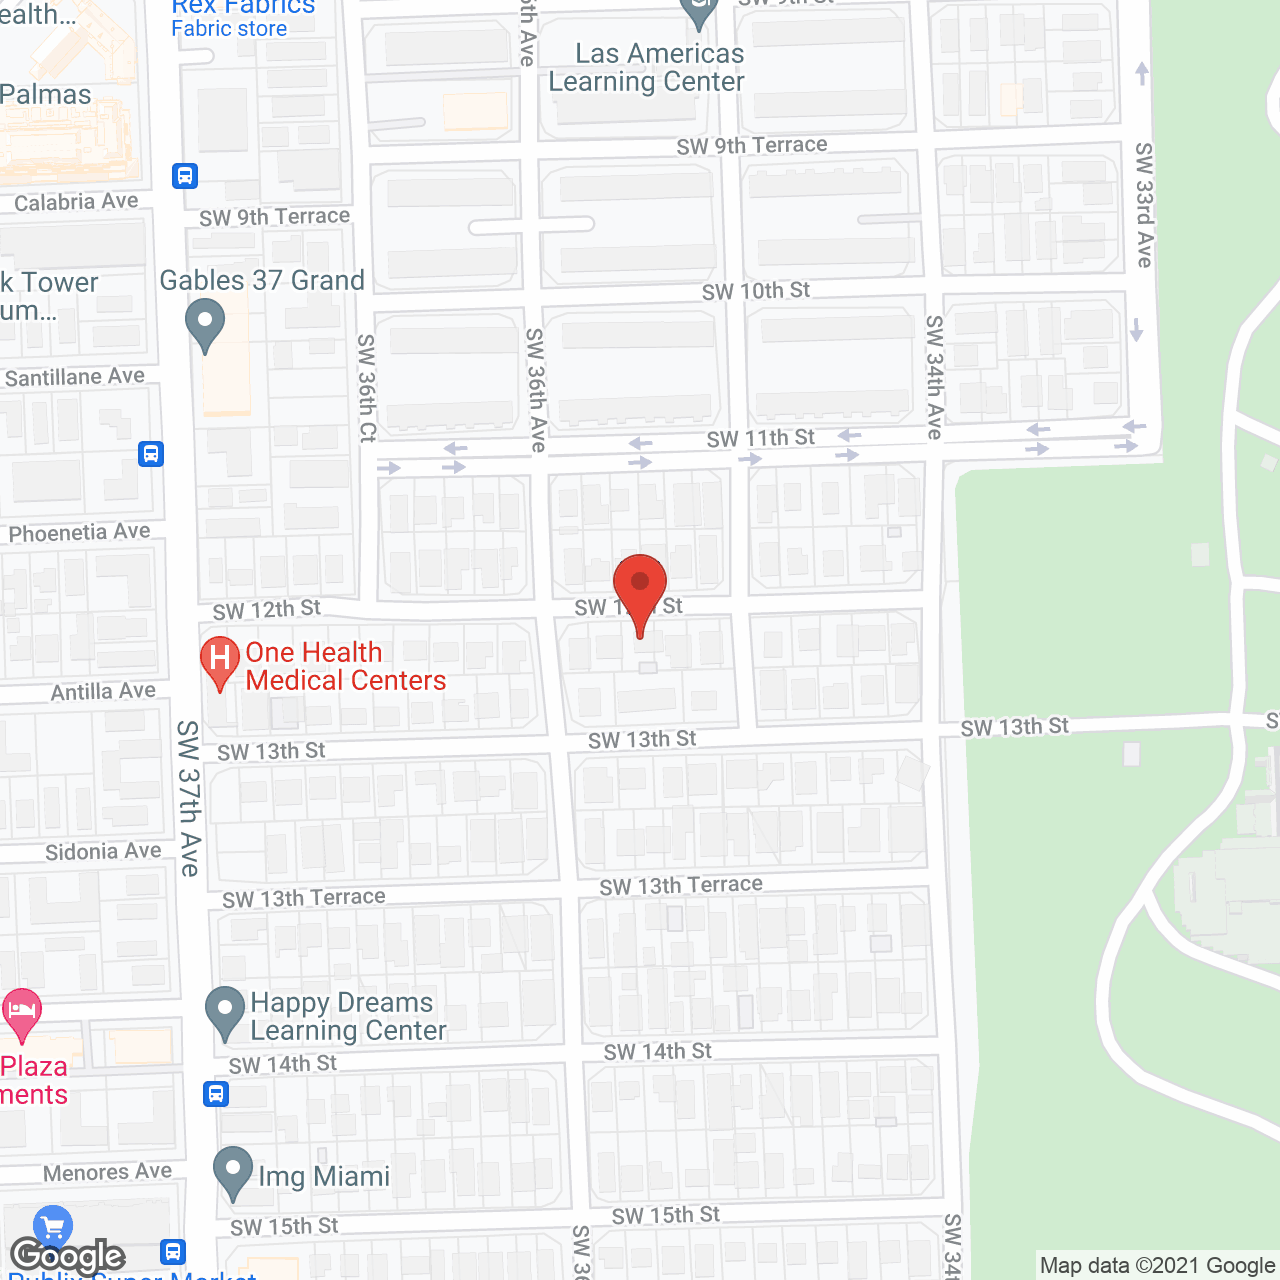 Idalmis Residence in google map